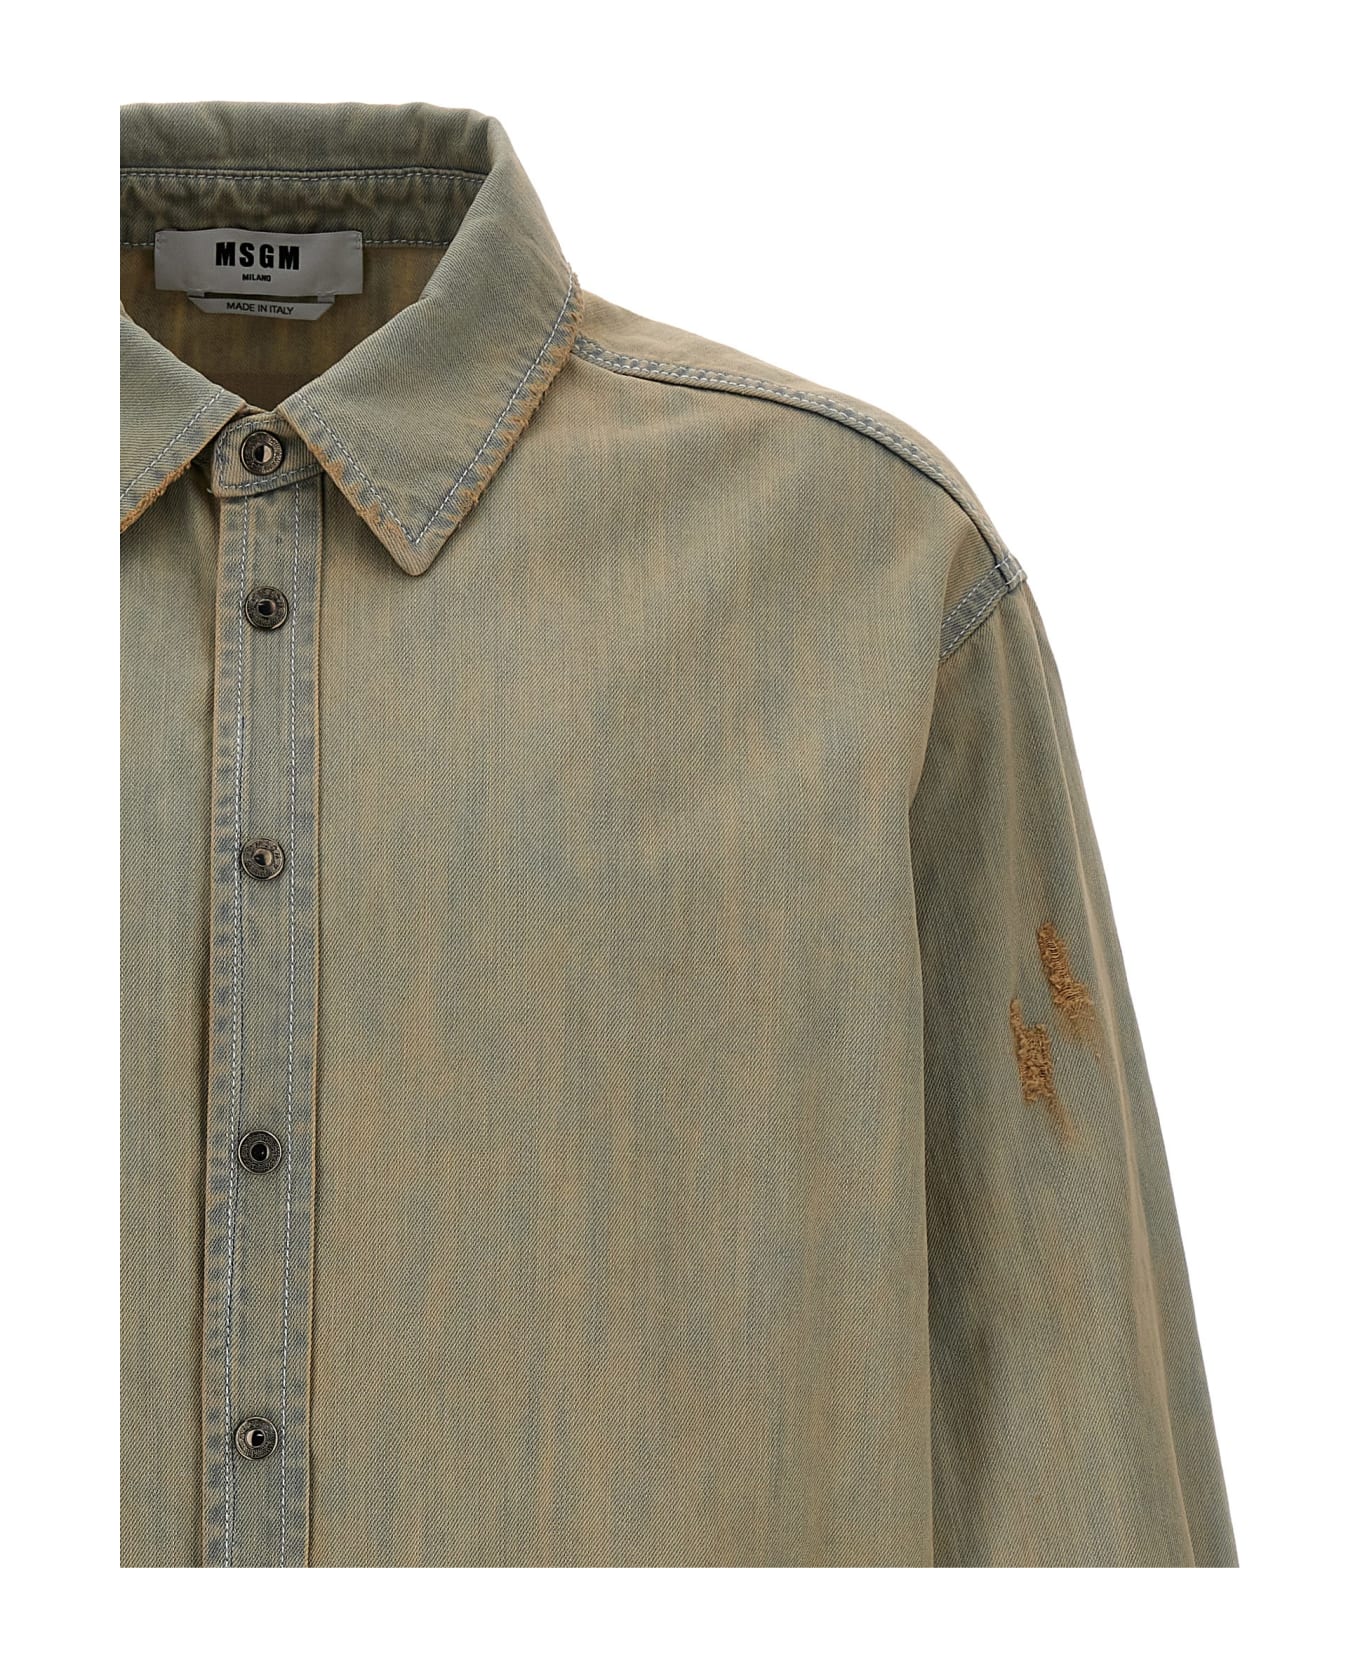 MSGM Stone Wash Denim Shirt - Blue/beige